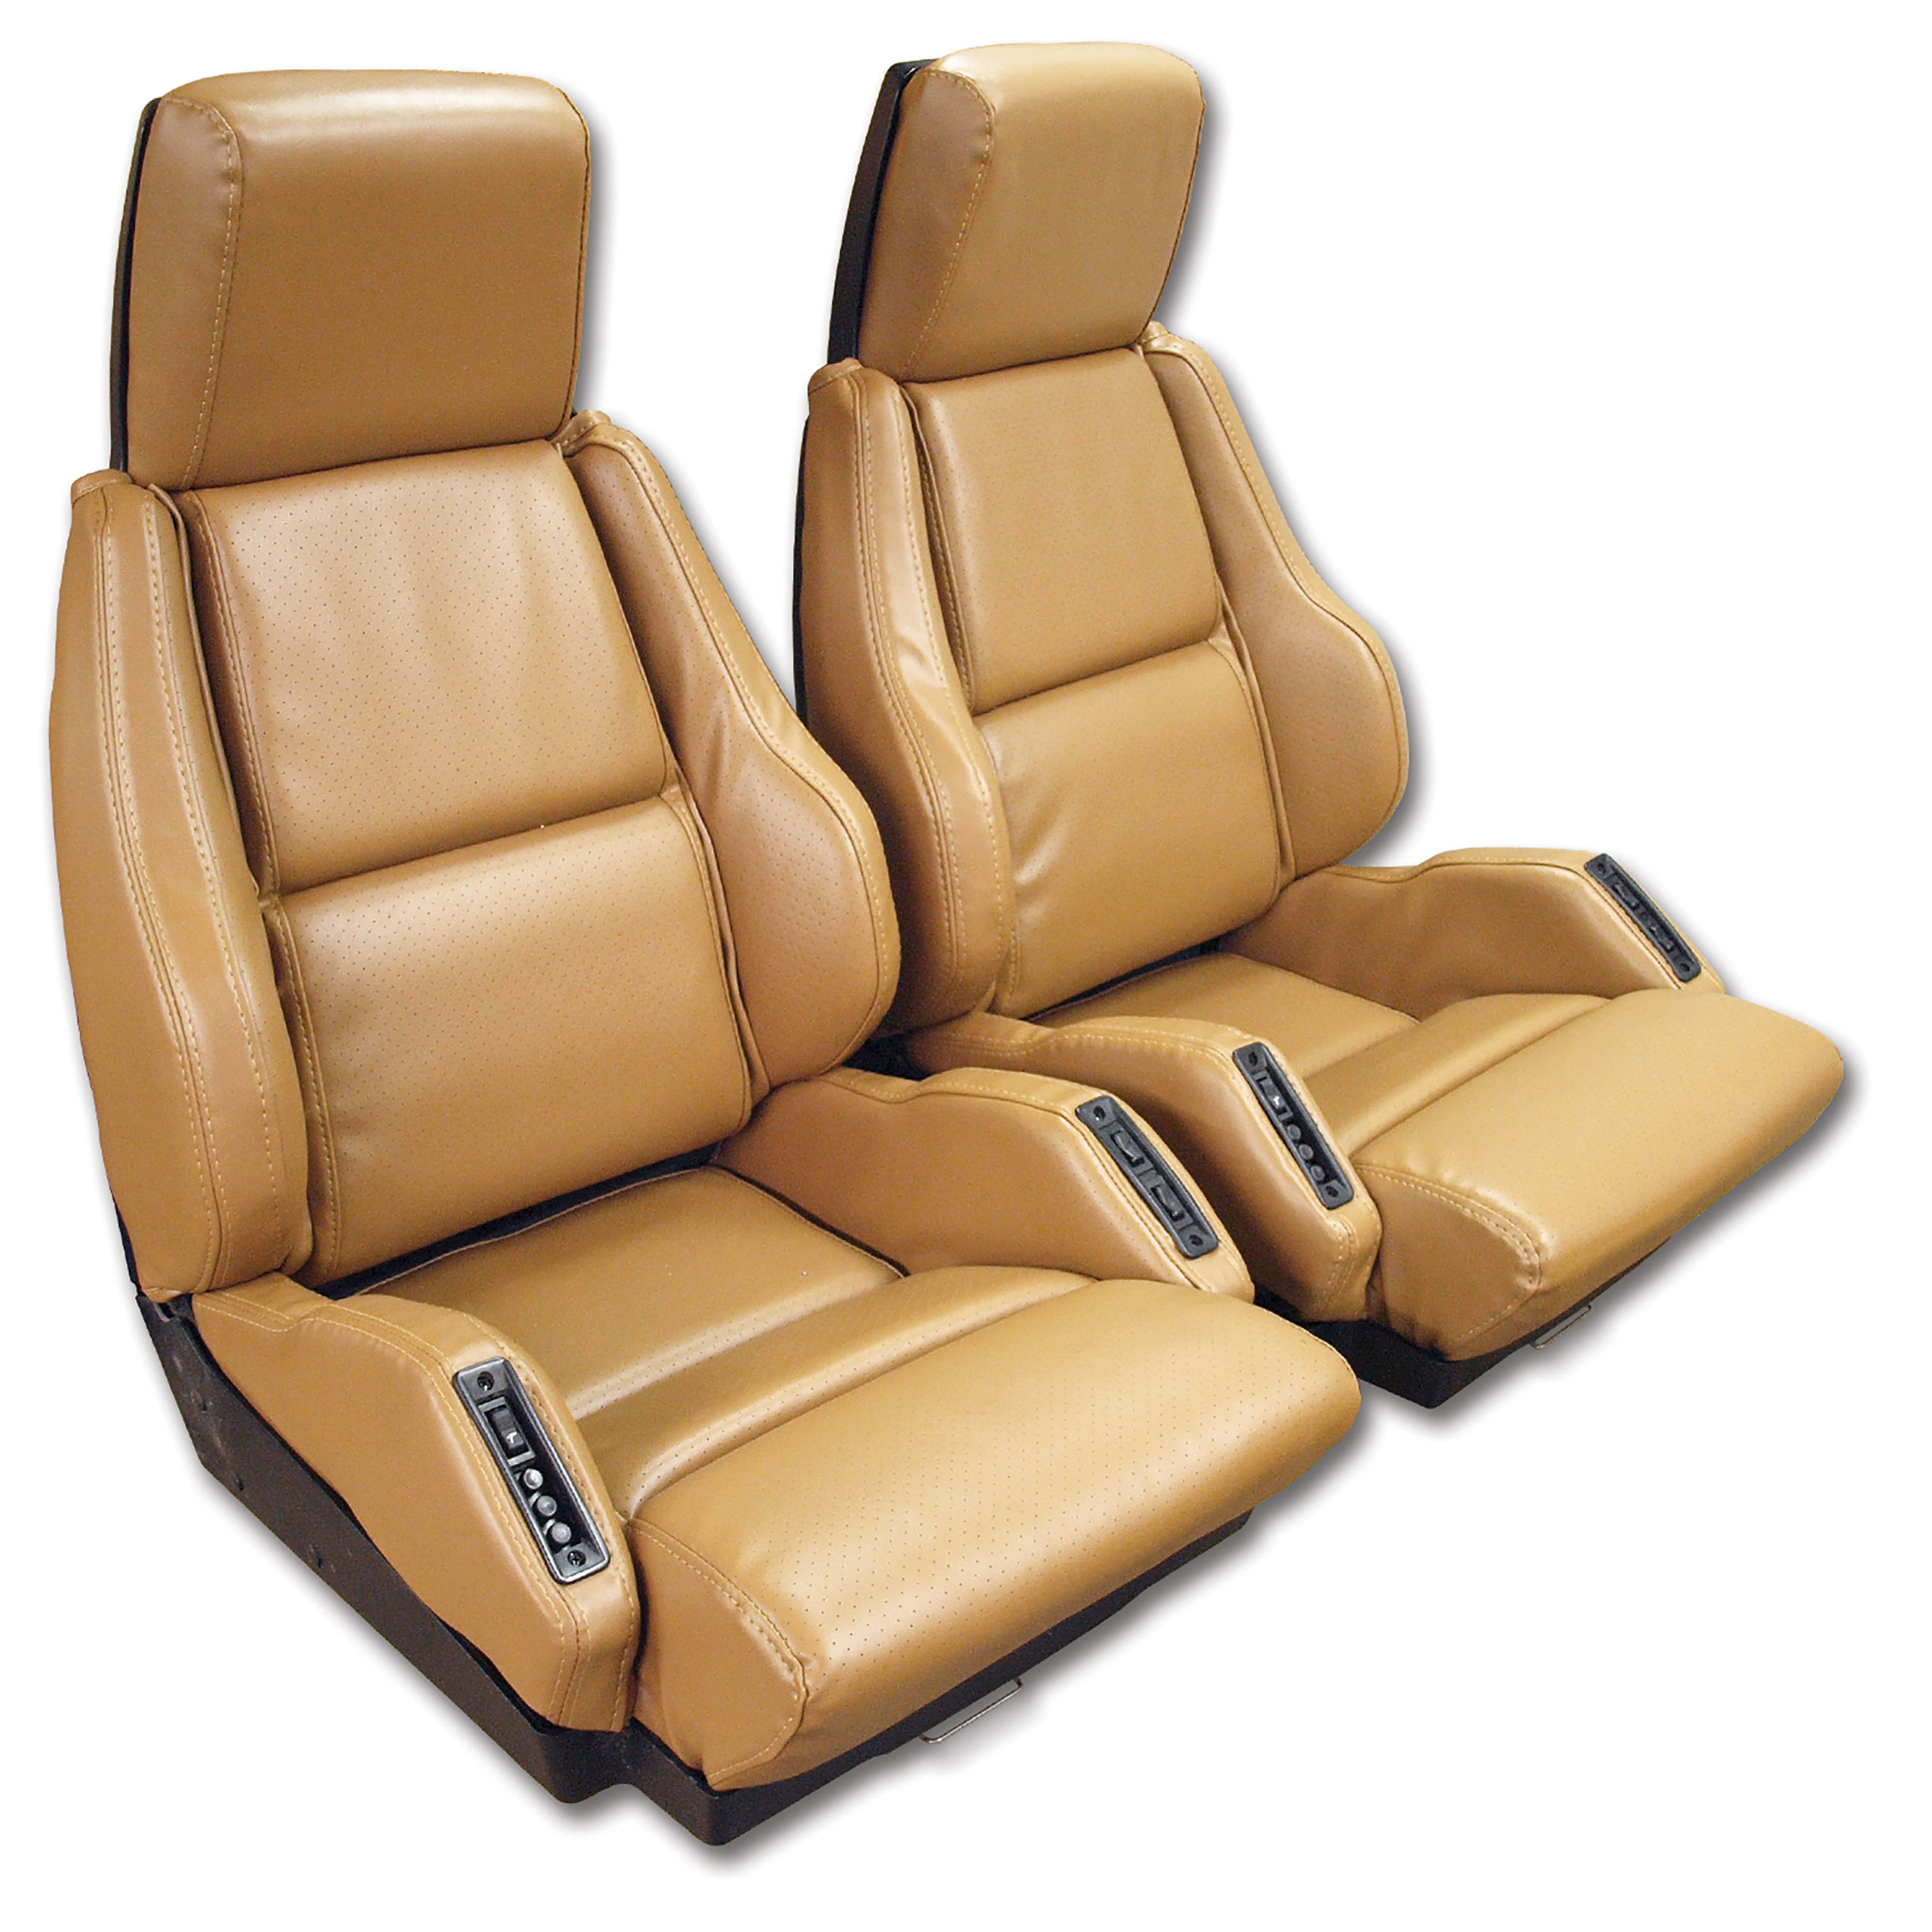 1988 Corvette C4 "Leather-Like" Vinyl Seat Covers Saddle Sport CA-422078 